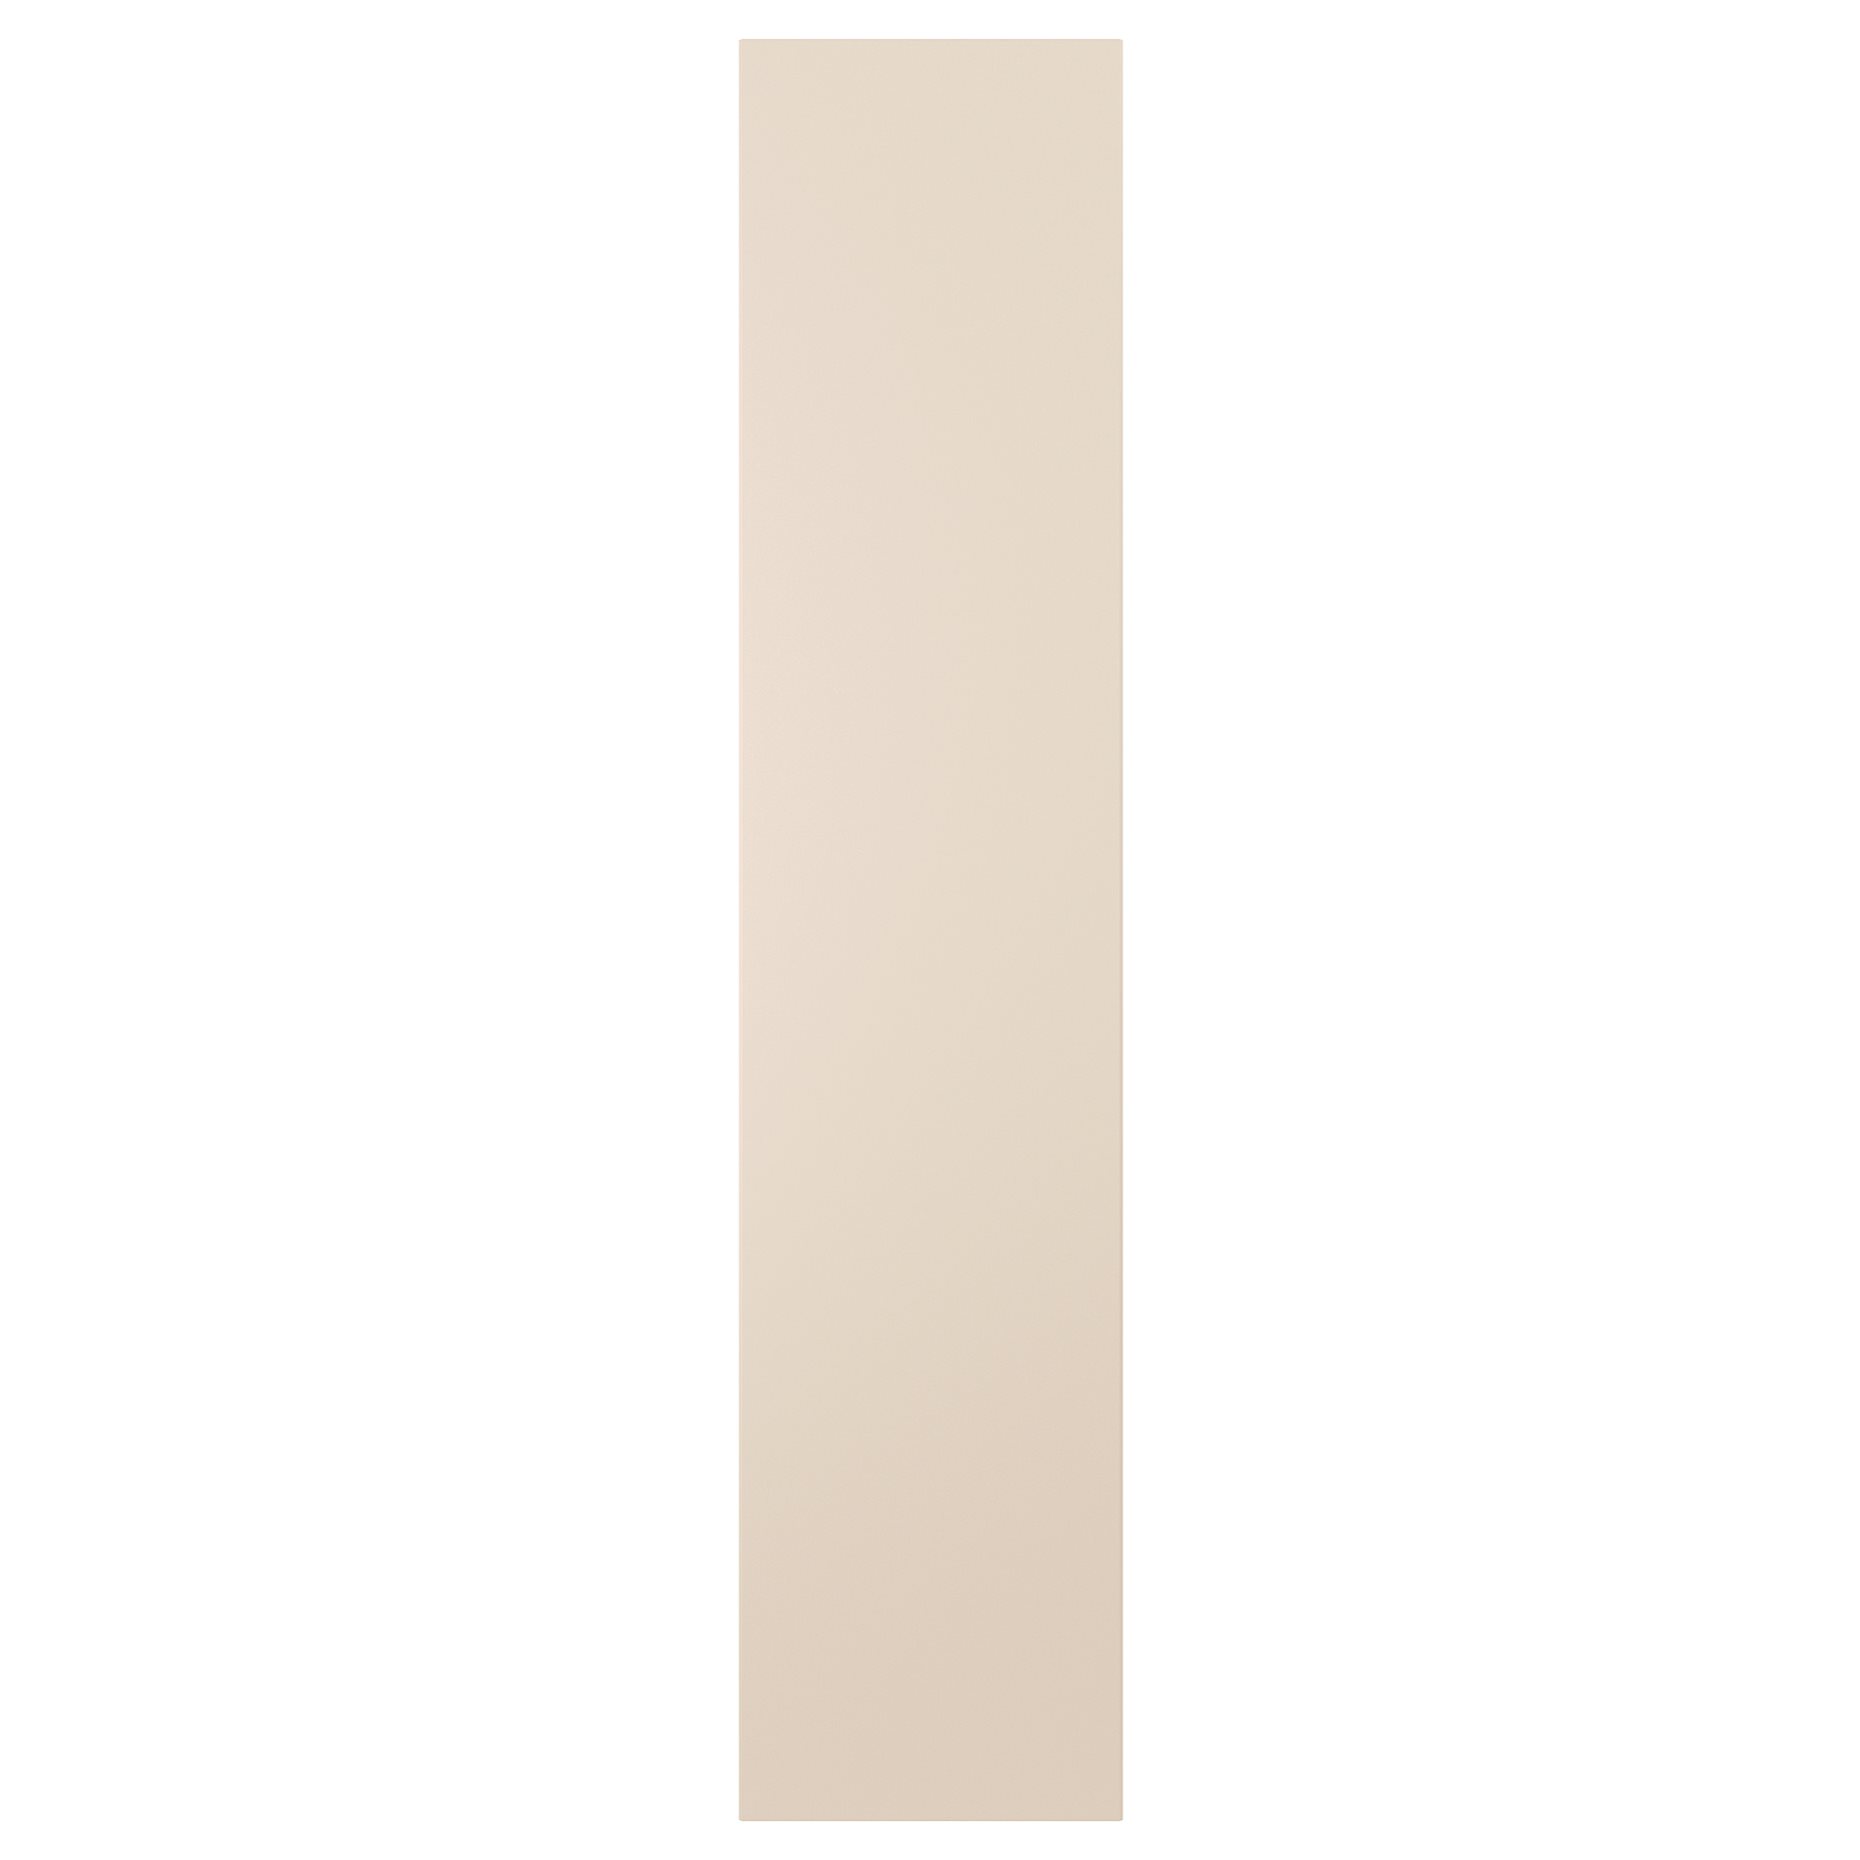 REINSVOLL, πόρτα με μεντεσέδες, 50x229 cm, 793.359.10